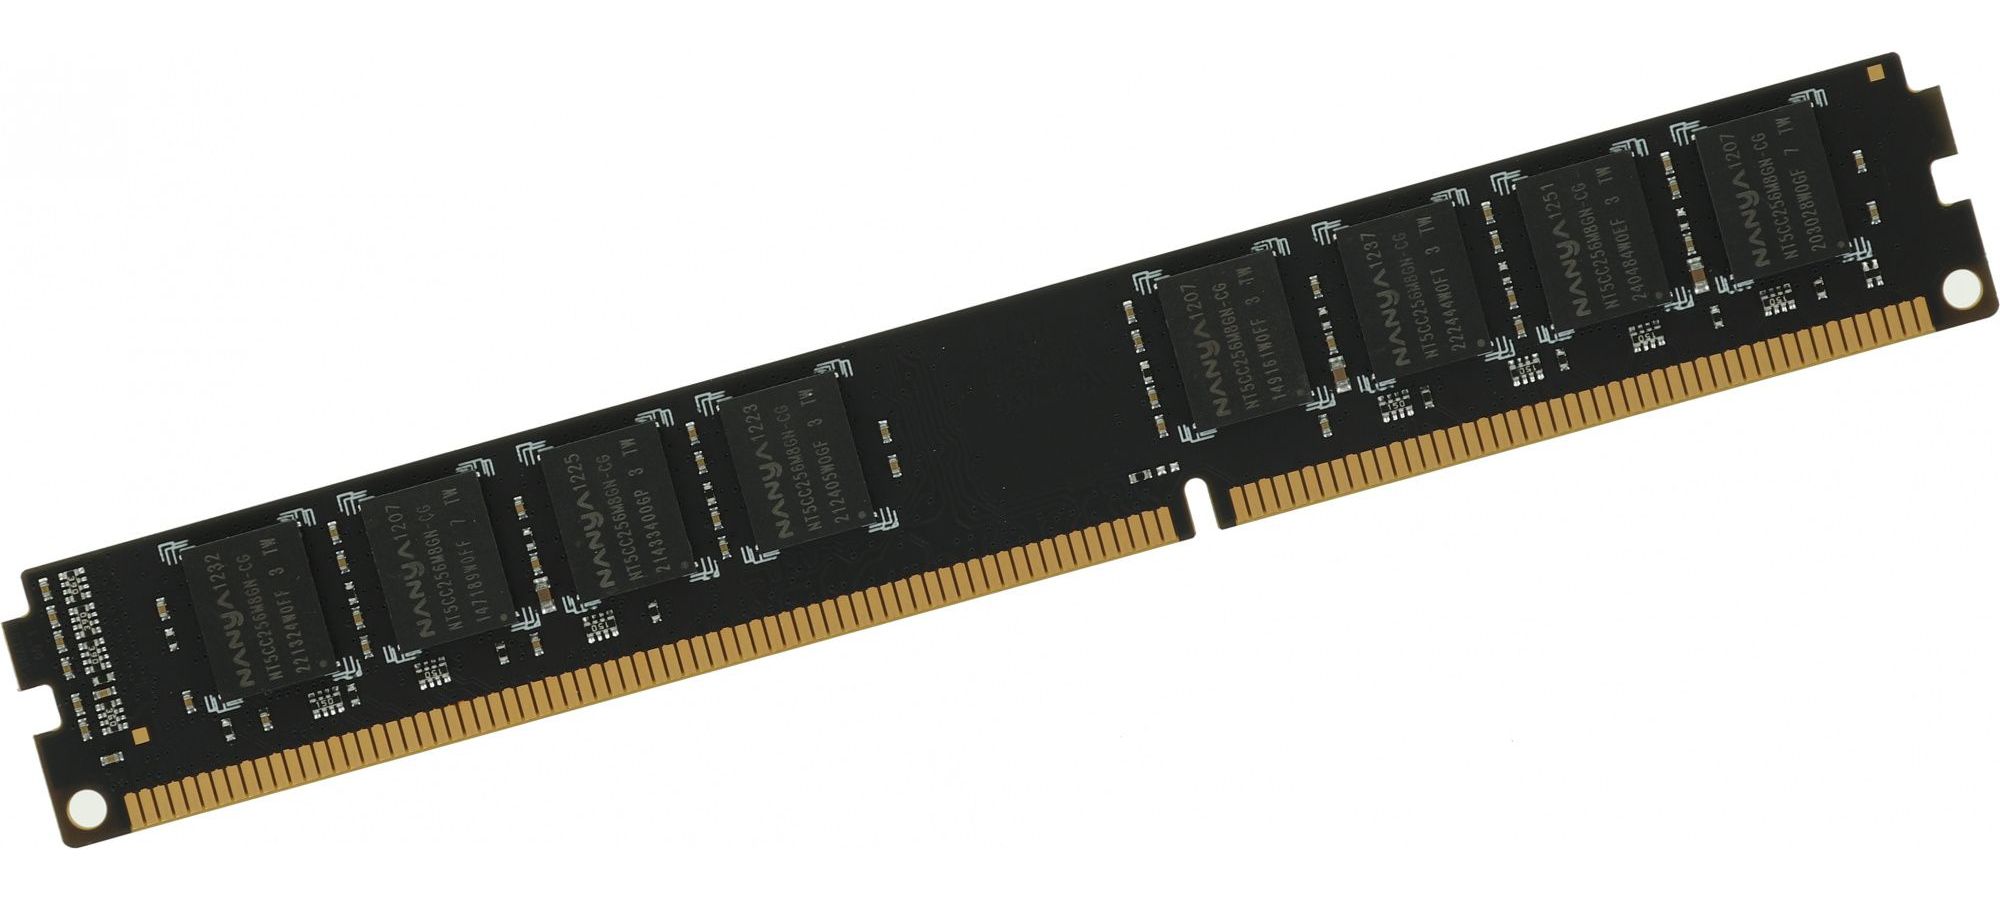 Память оперативная DDR3 Digma 4Gb 1600MHz (DGMAD31600004D) память оперативная ddr3 kingston 4gb 1600mhz kvr16s11s8 4wp